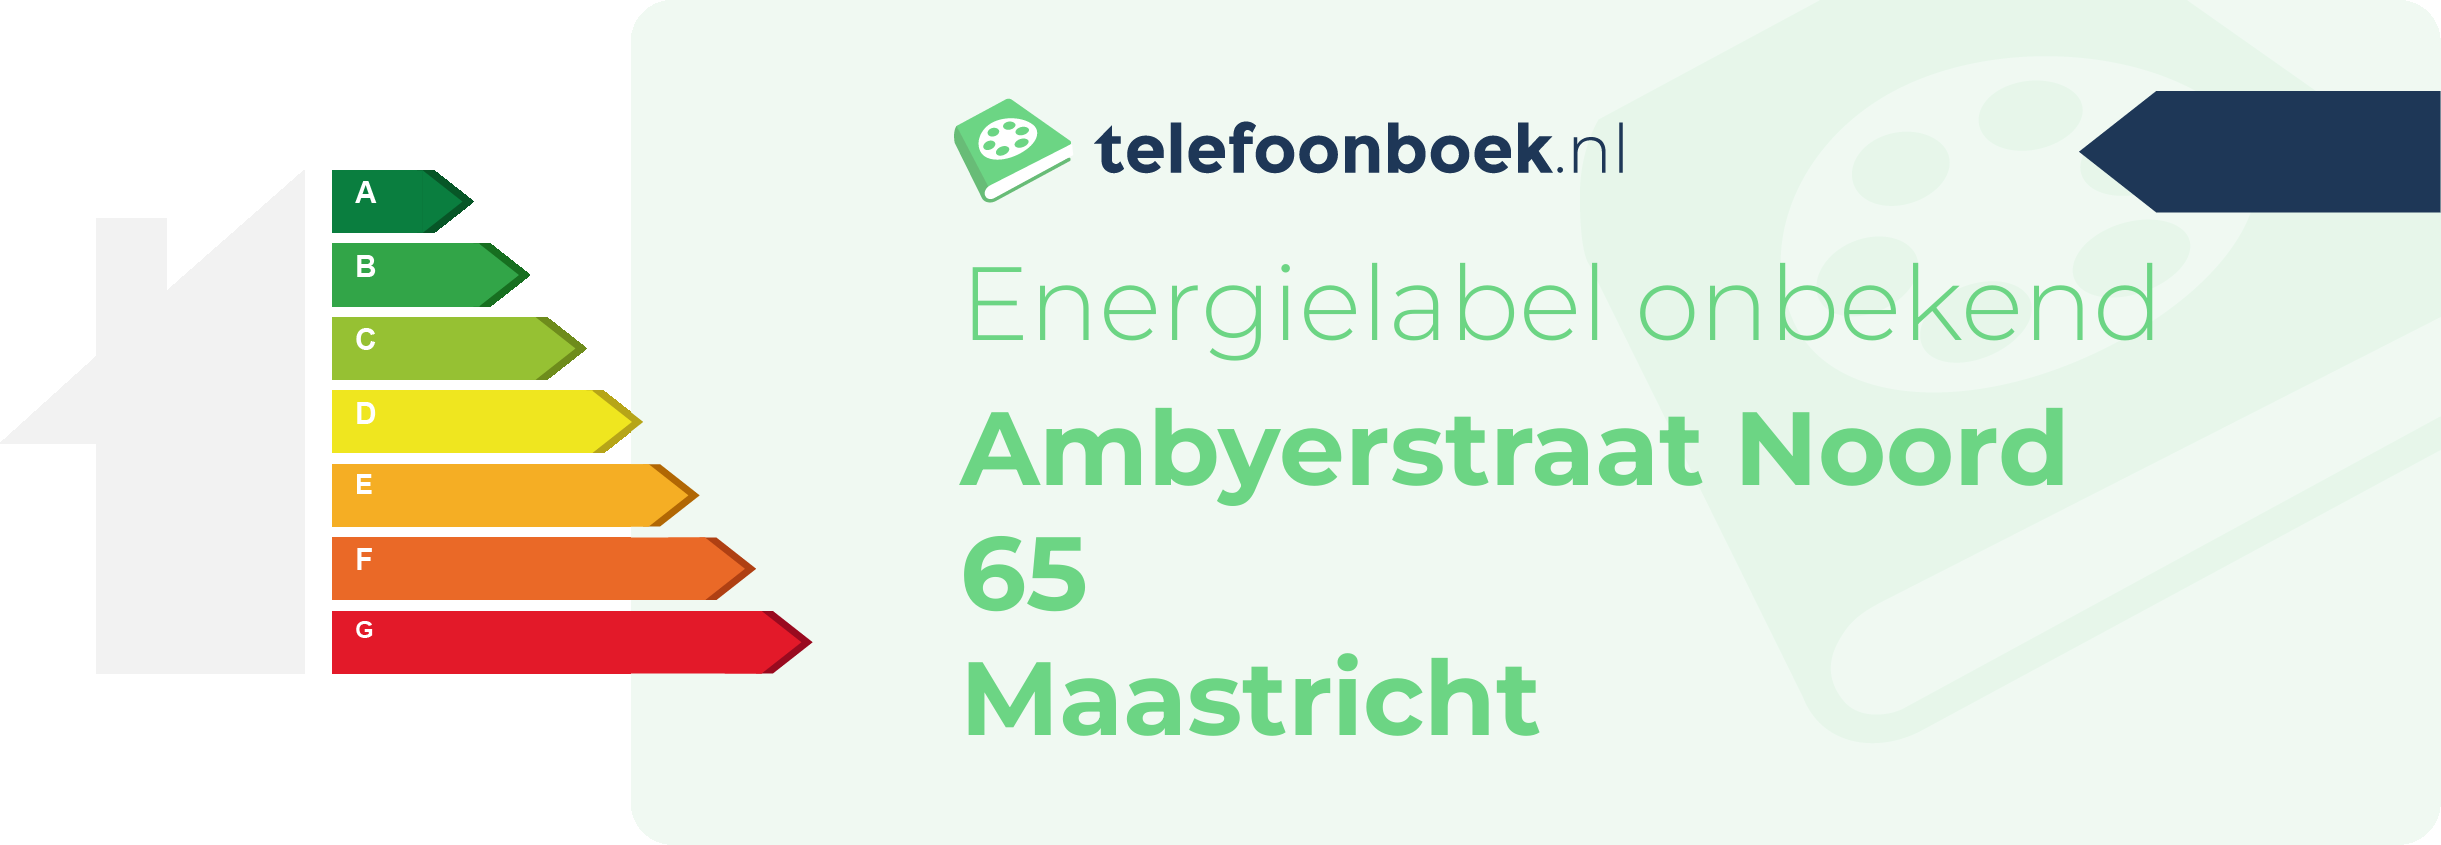 Energielabel Ambyerstraat Noord 65 Maastricht